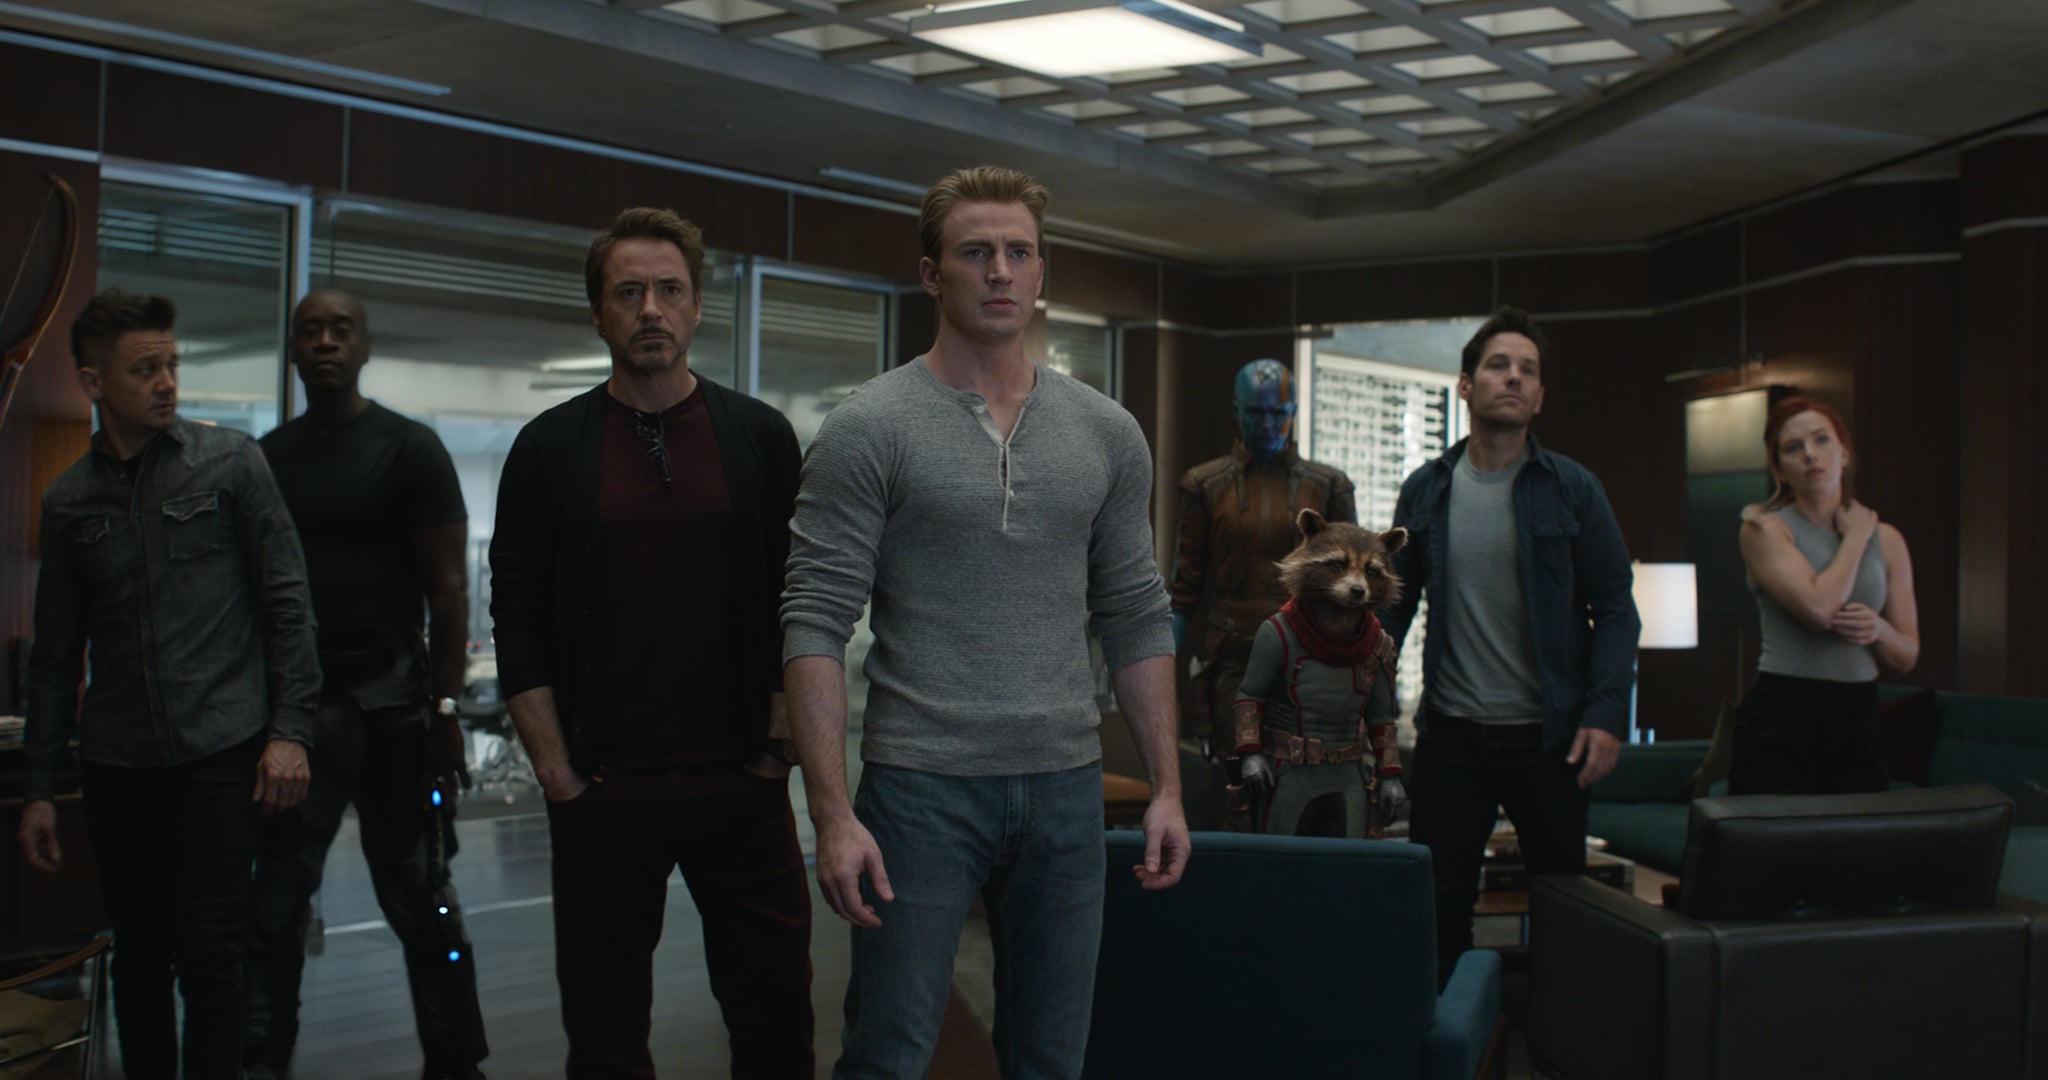 is Avengers: Endgame on Netflix?